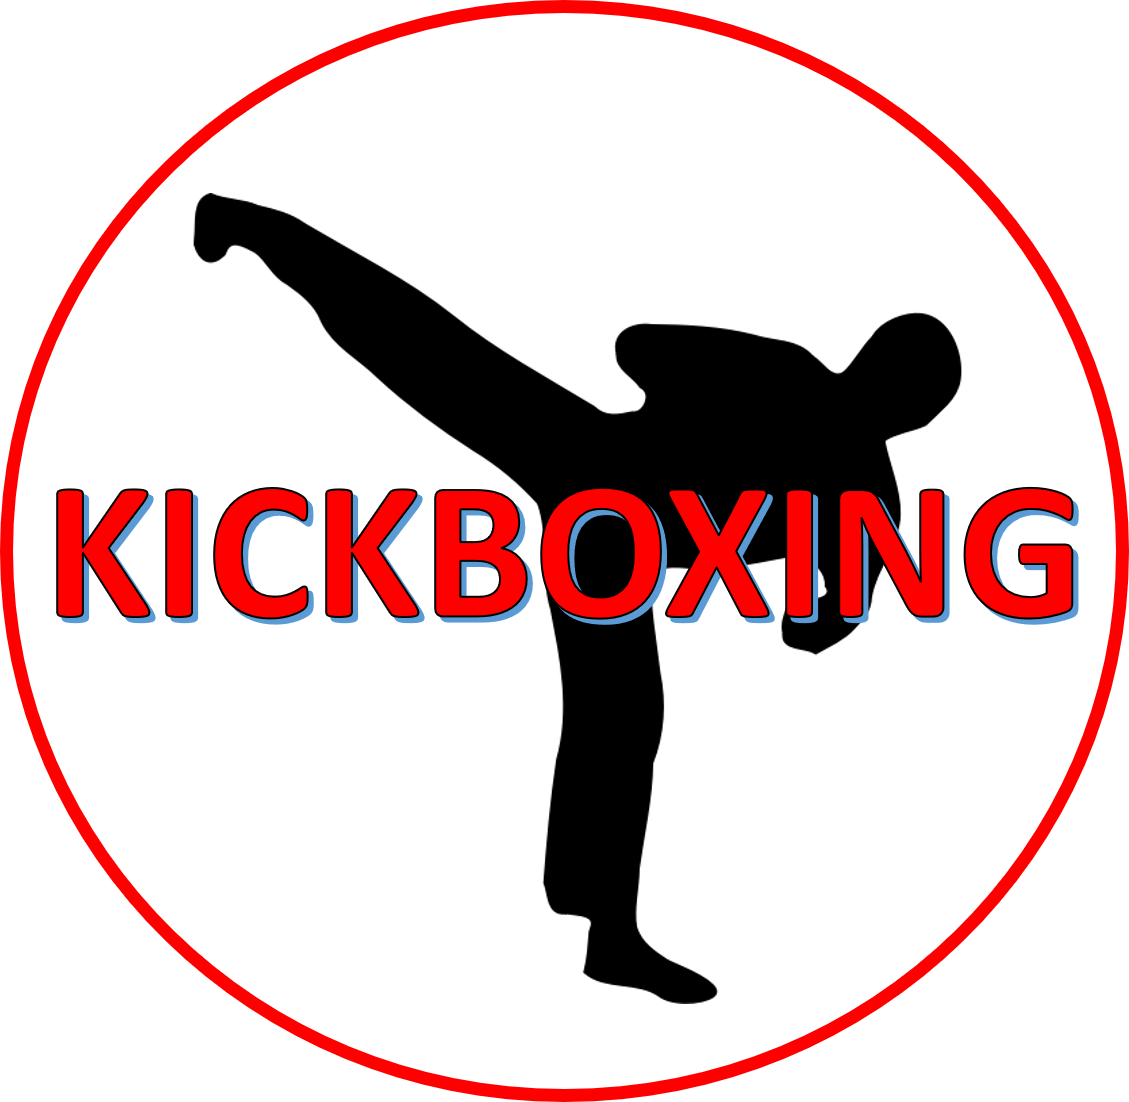 Free kickboxing - Vector Art